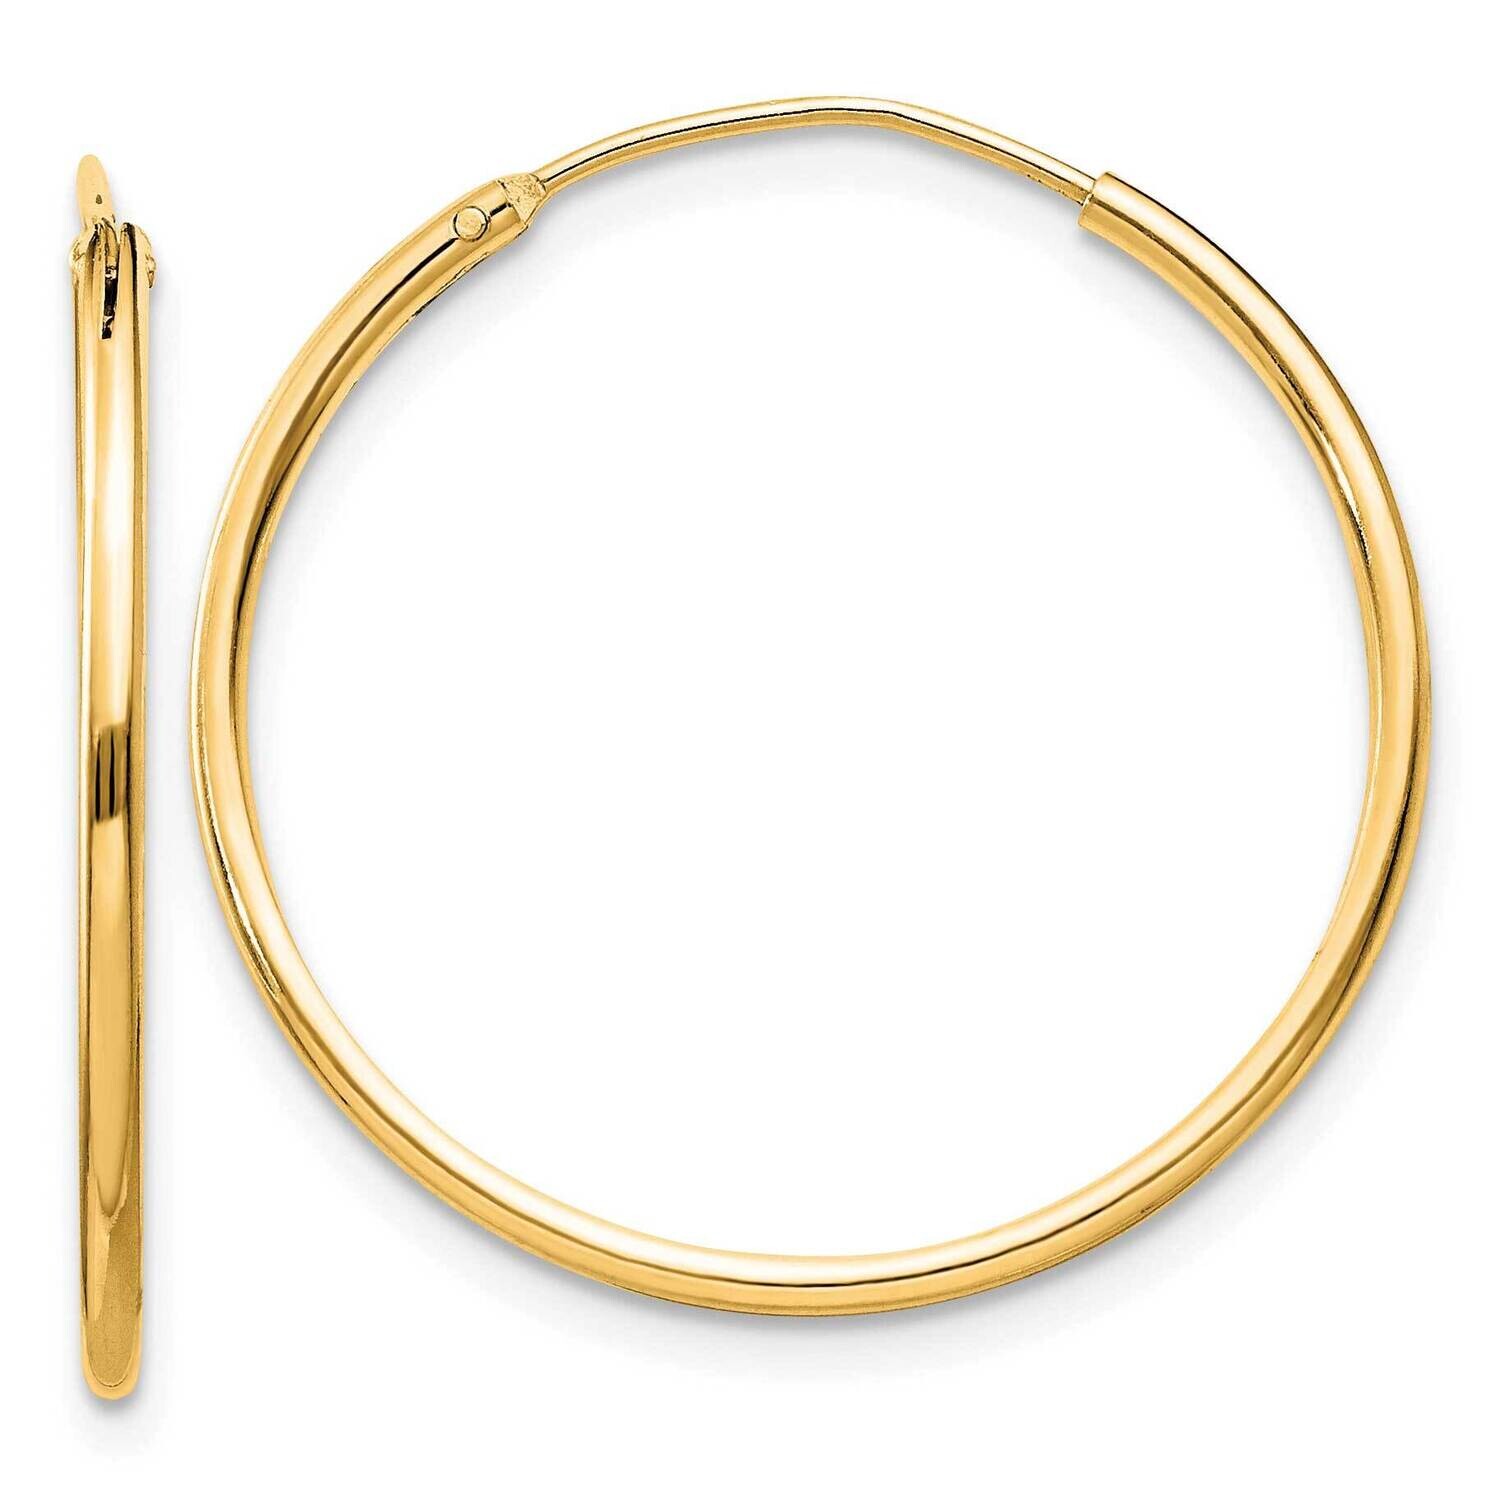 Flash Gold-Plated 1.3mm Endless Hoop Earrings Sterling Silver QE4354GP